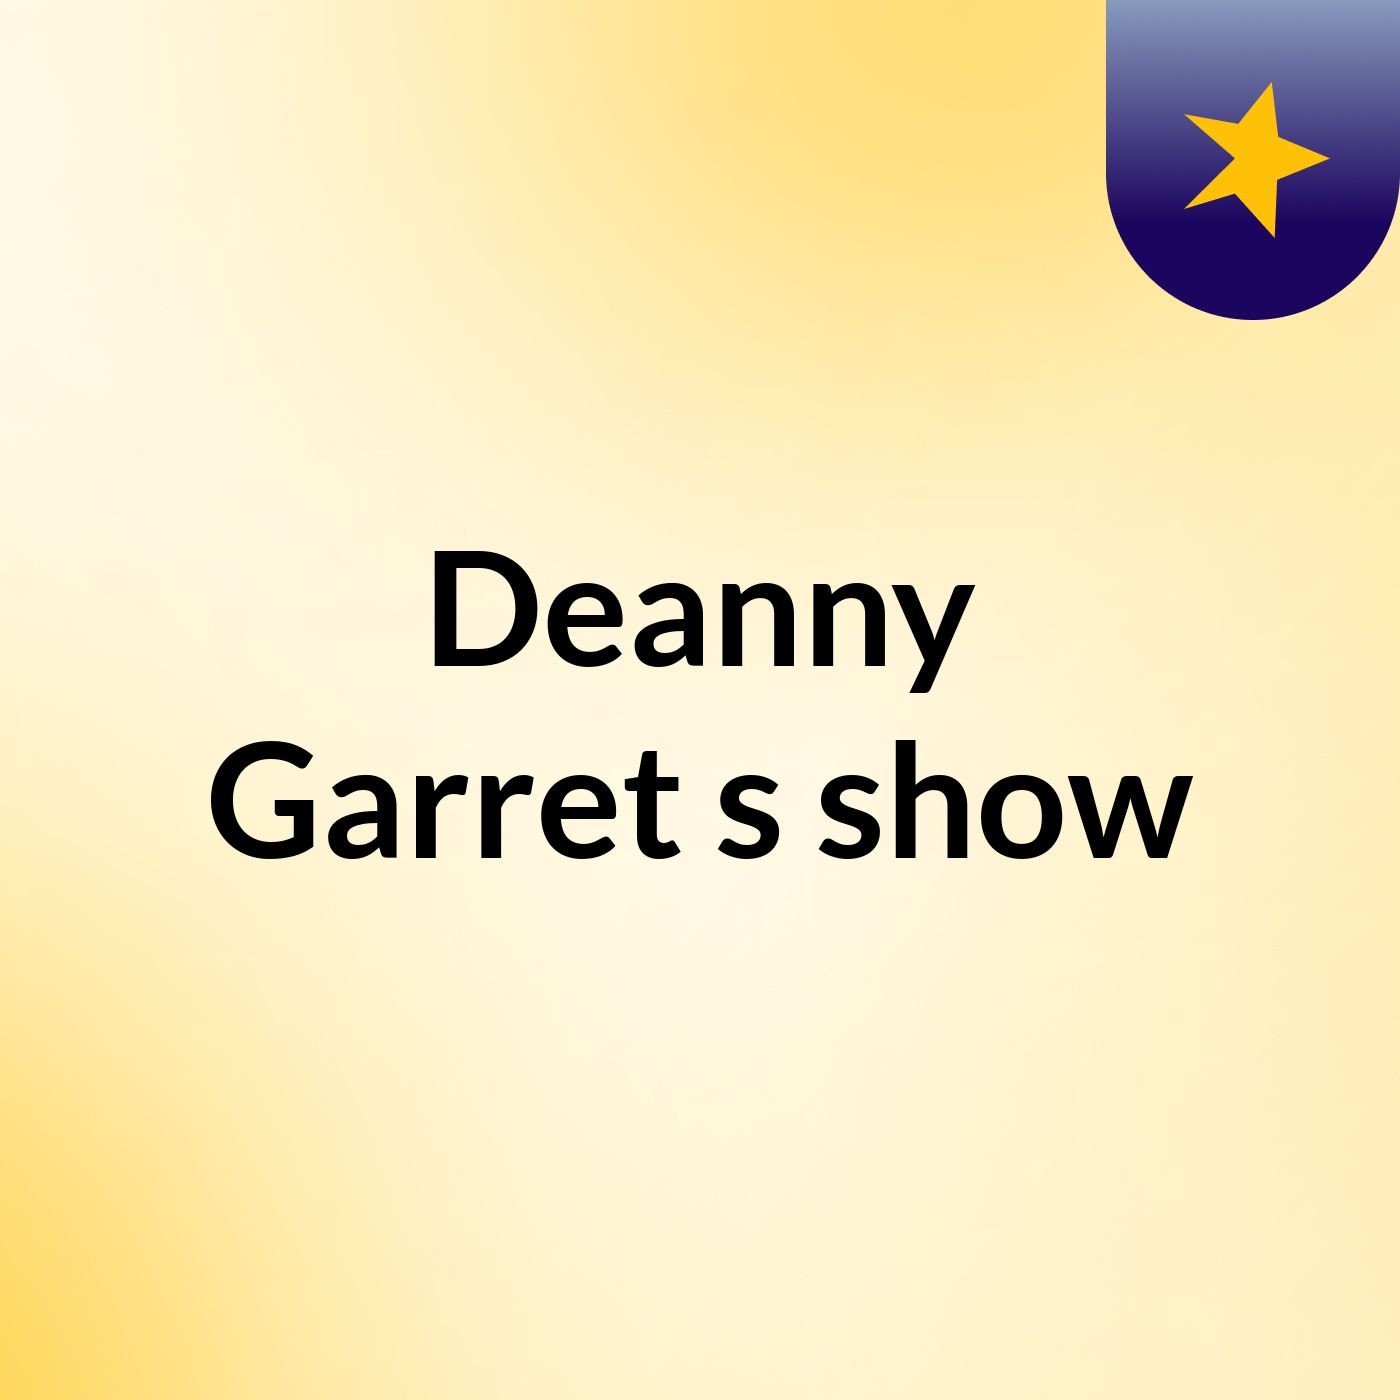 Deanny Garret's show